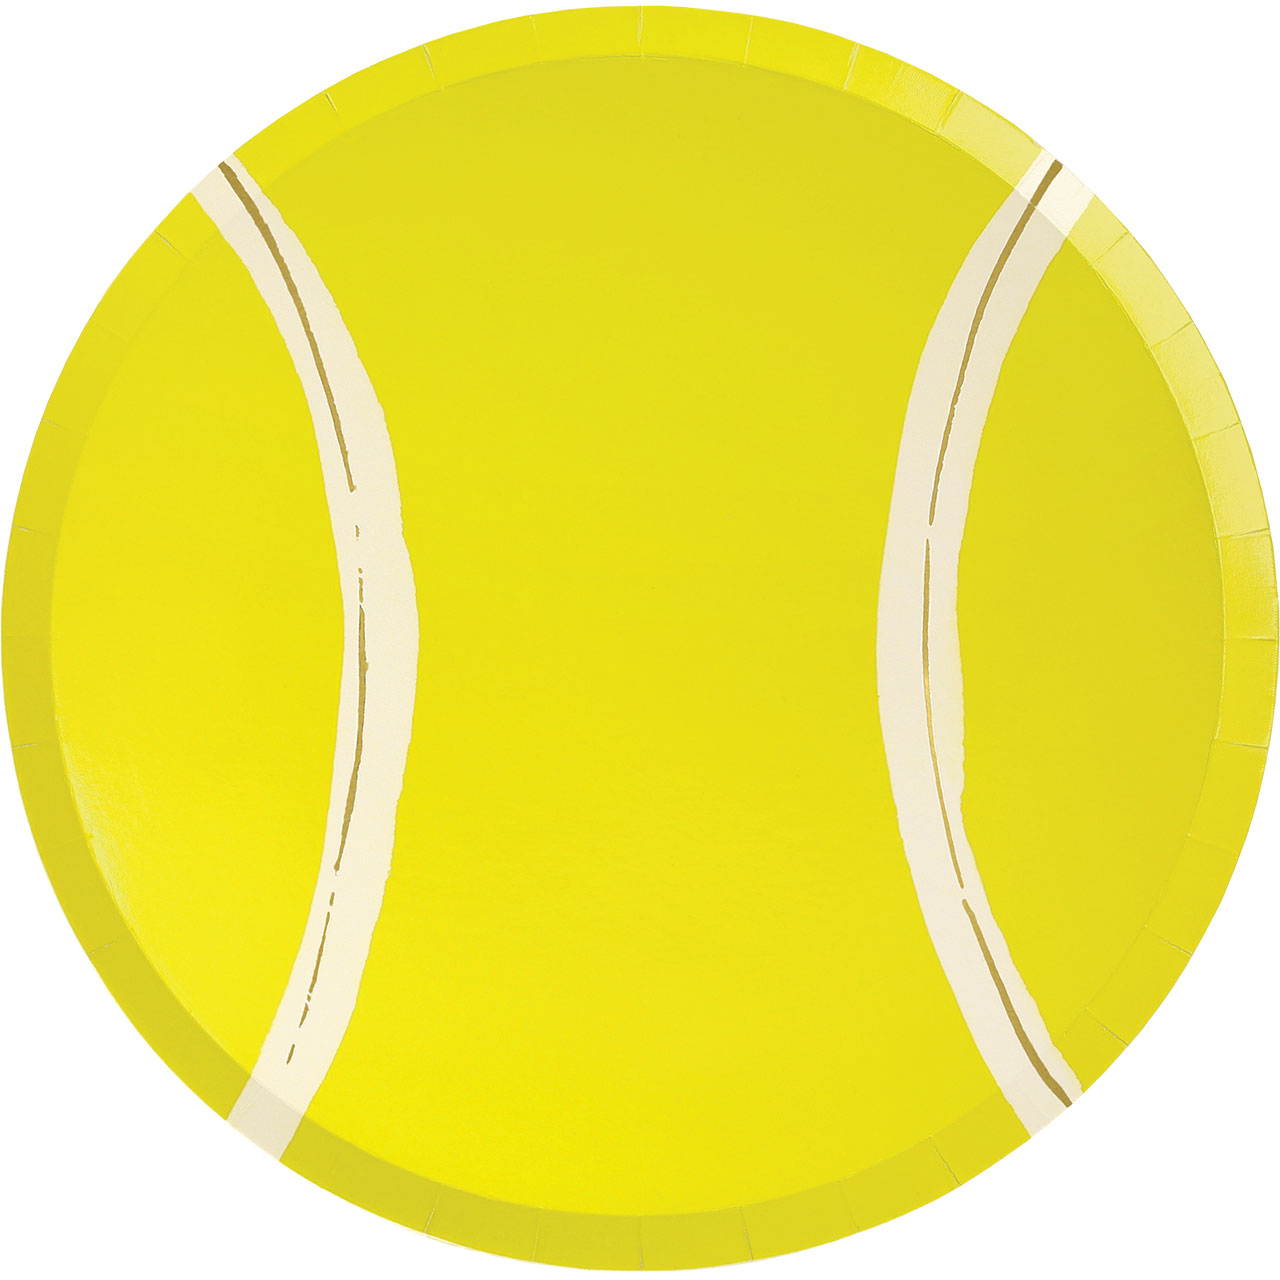 Plates - Tennis